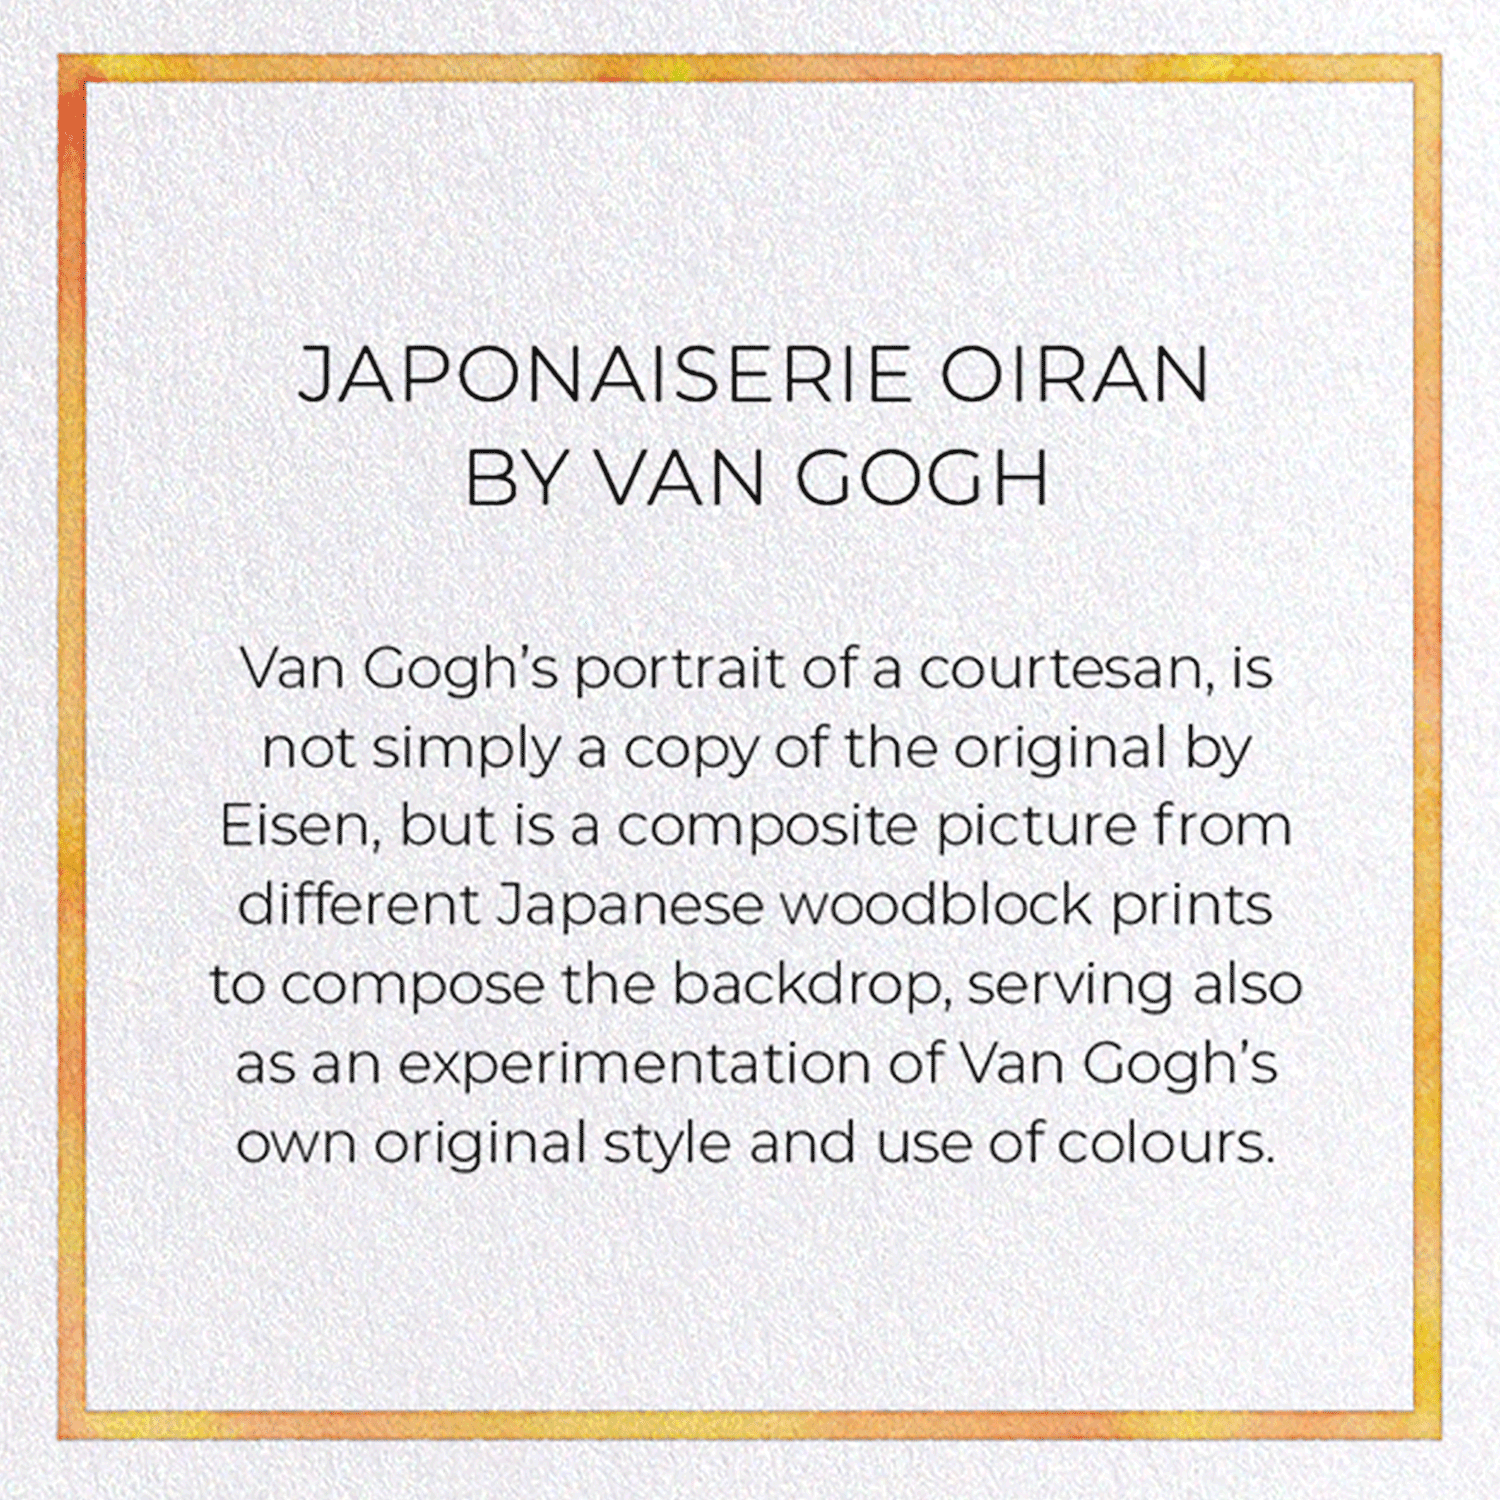 JAPONAISERIE OIRAN BY VAN GOGH